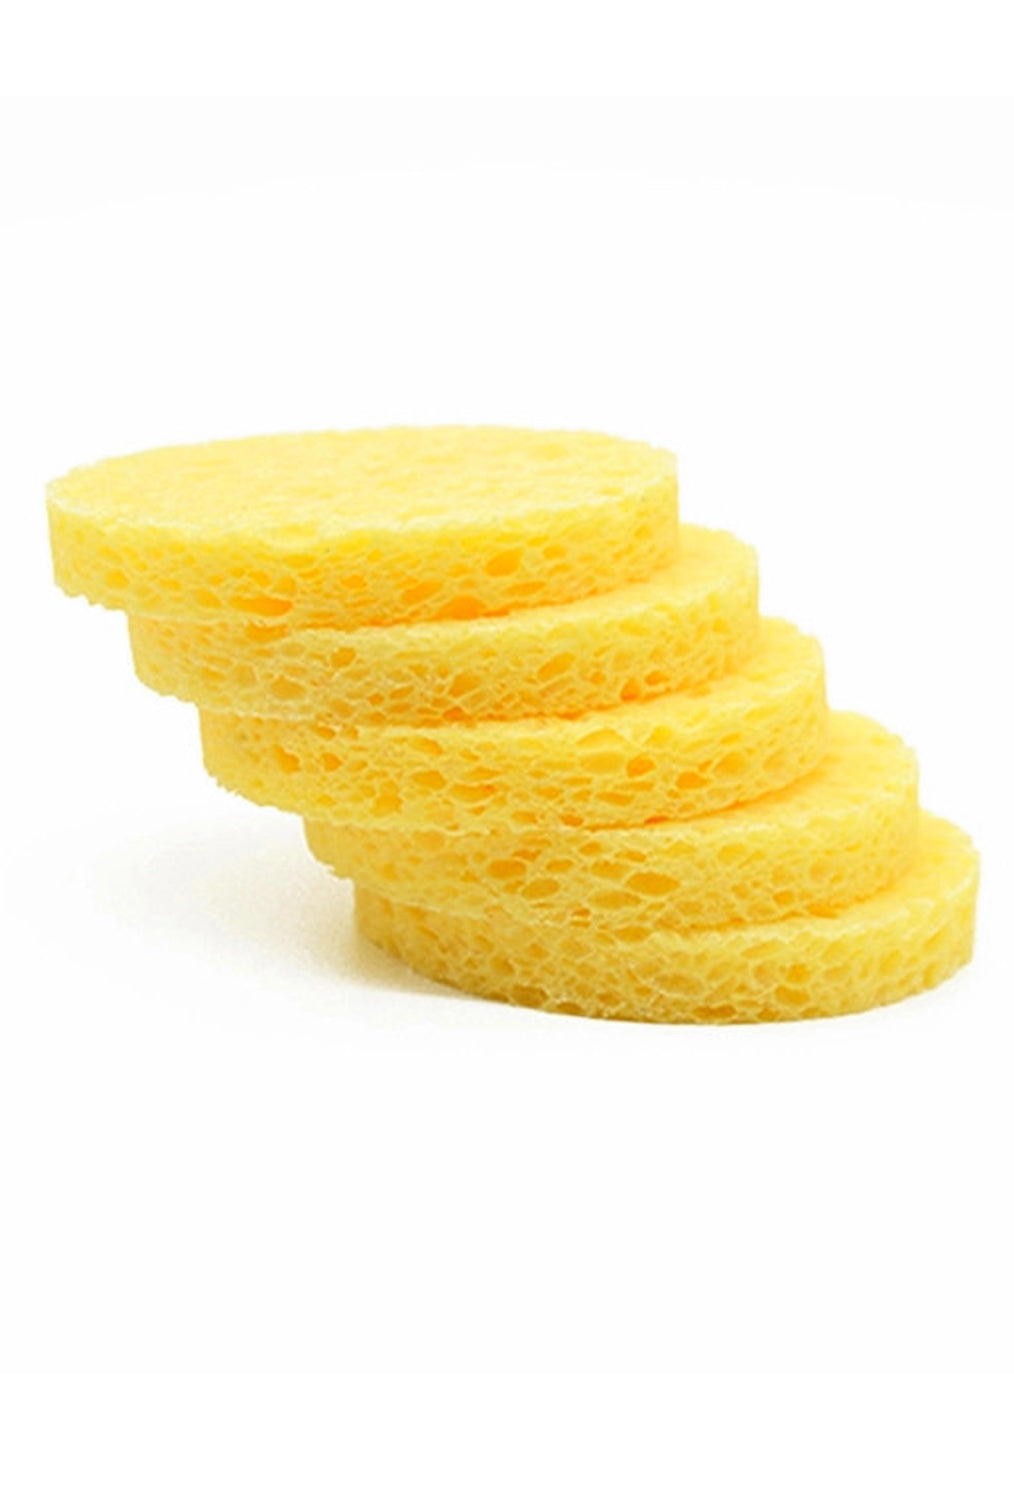 SIR Sponge Replacement Cleaning Sponge